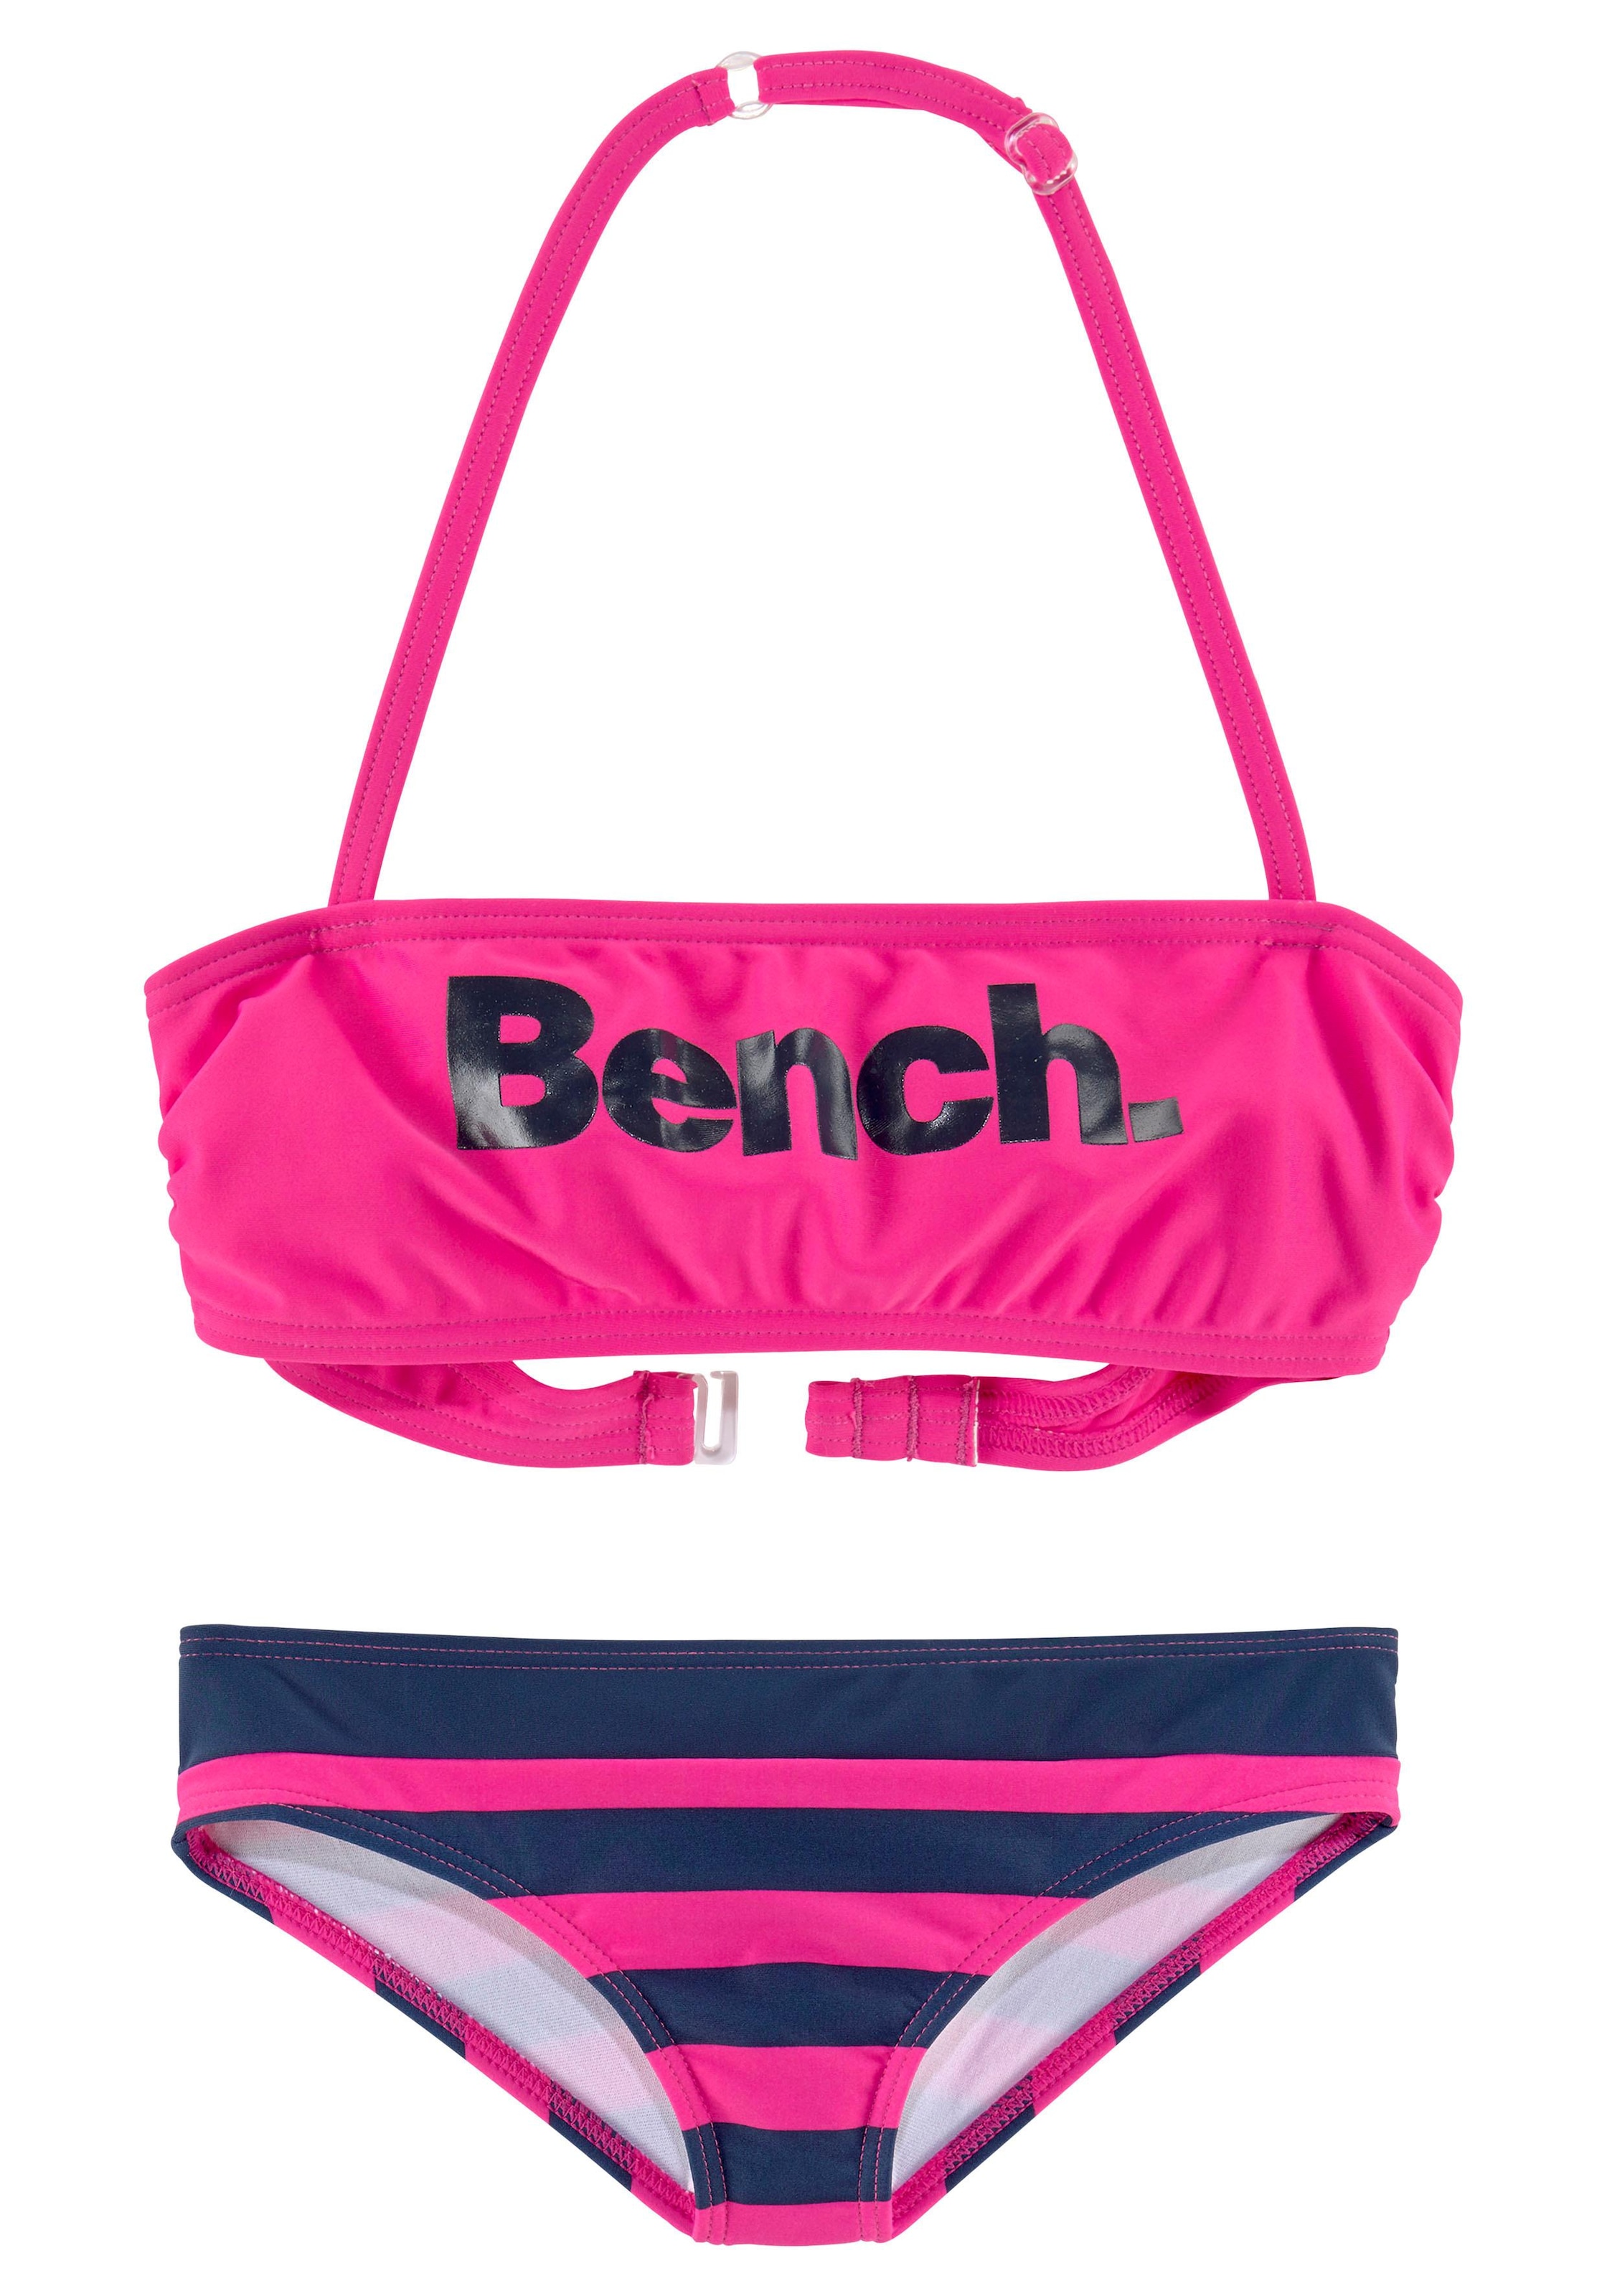 Bench. Bandeau-Bikini mit großem Logoprint BAUR kaufen online 